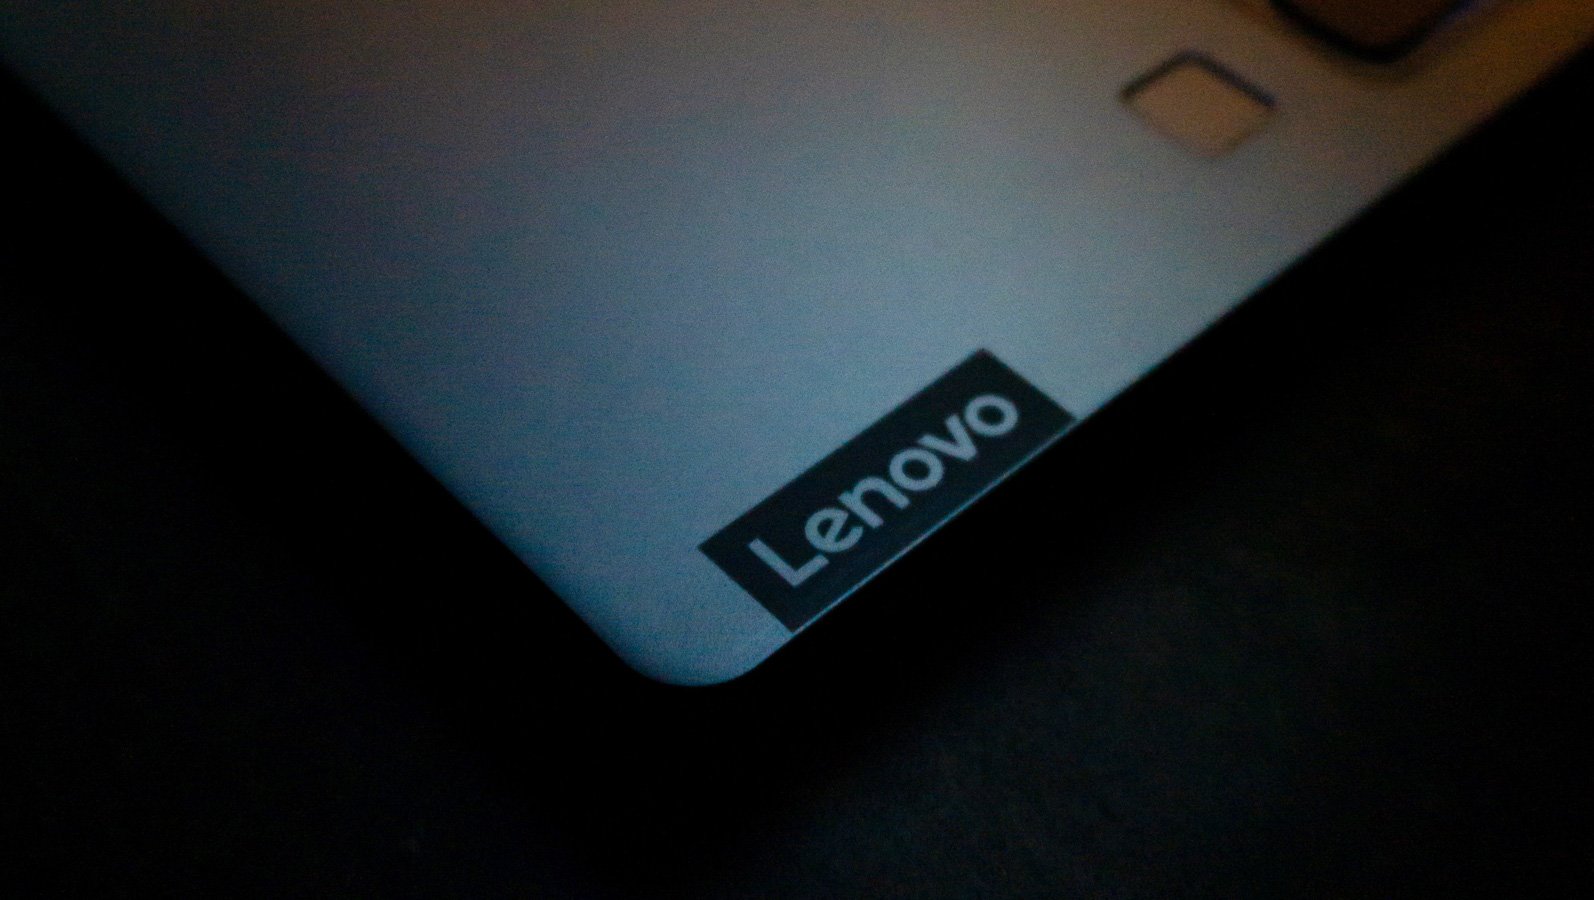 Corner of a Lenovo laptop